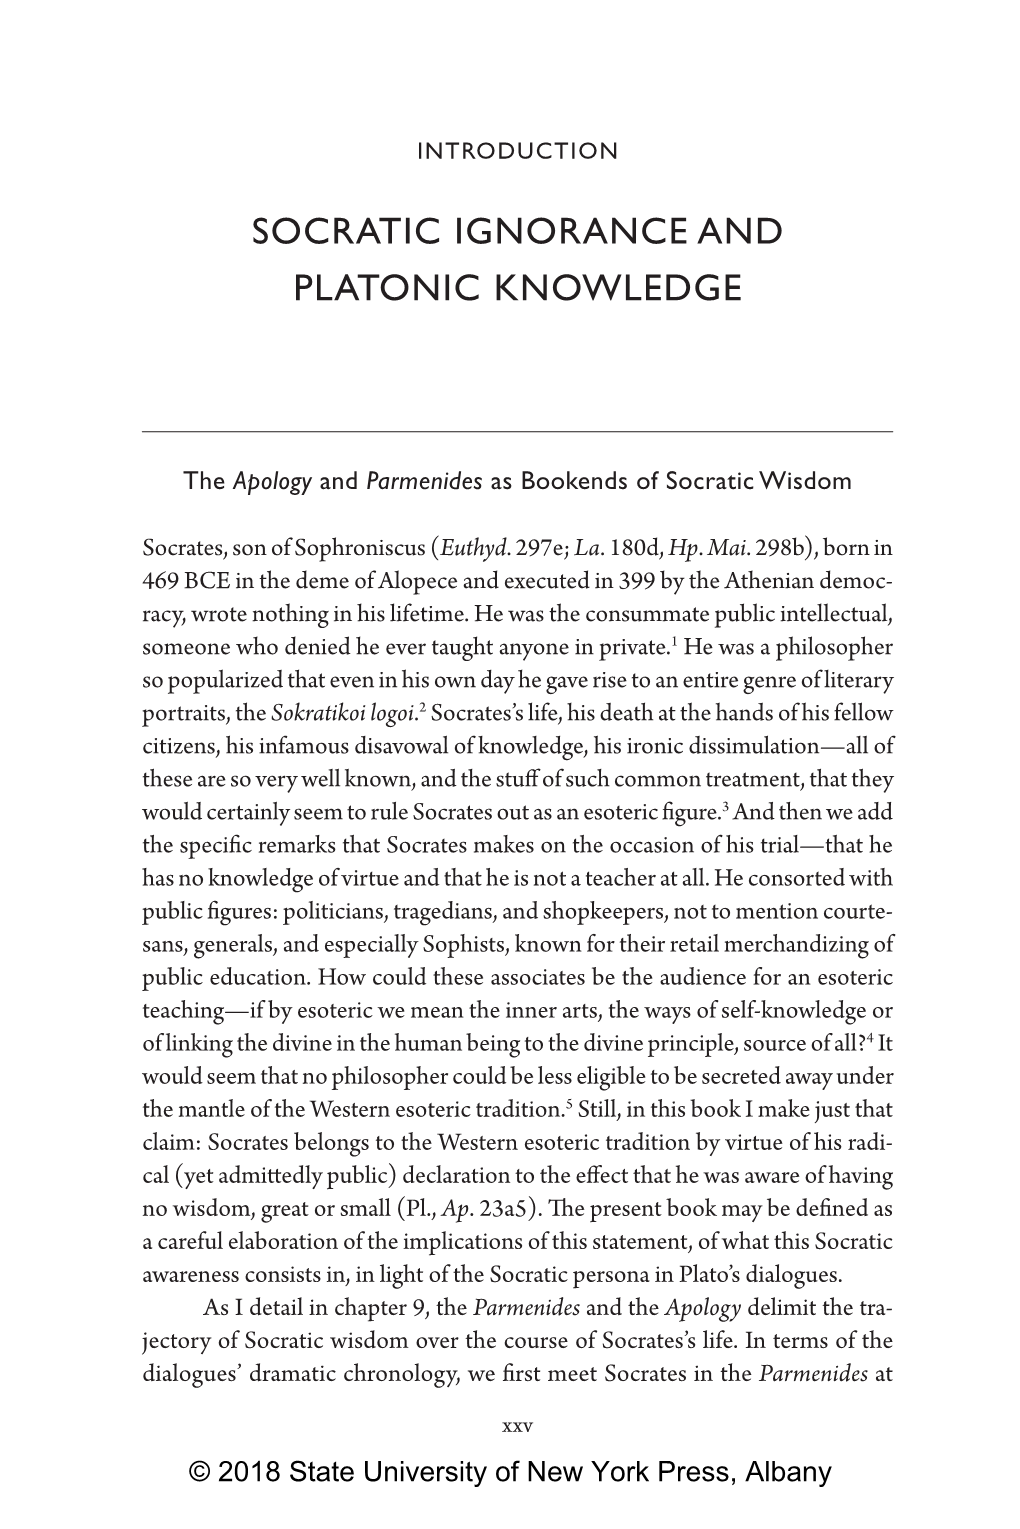 Socratic Ignorance and Platonic Knowledge